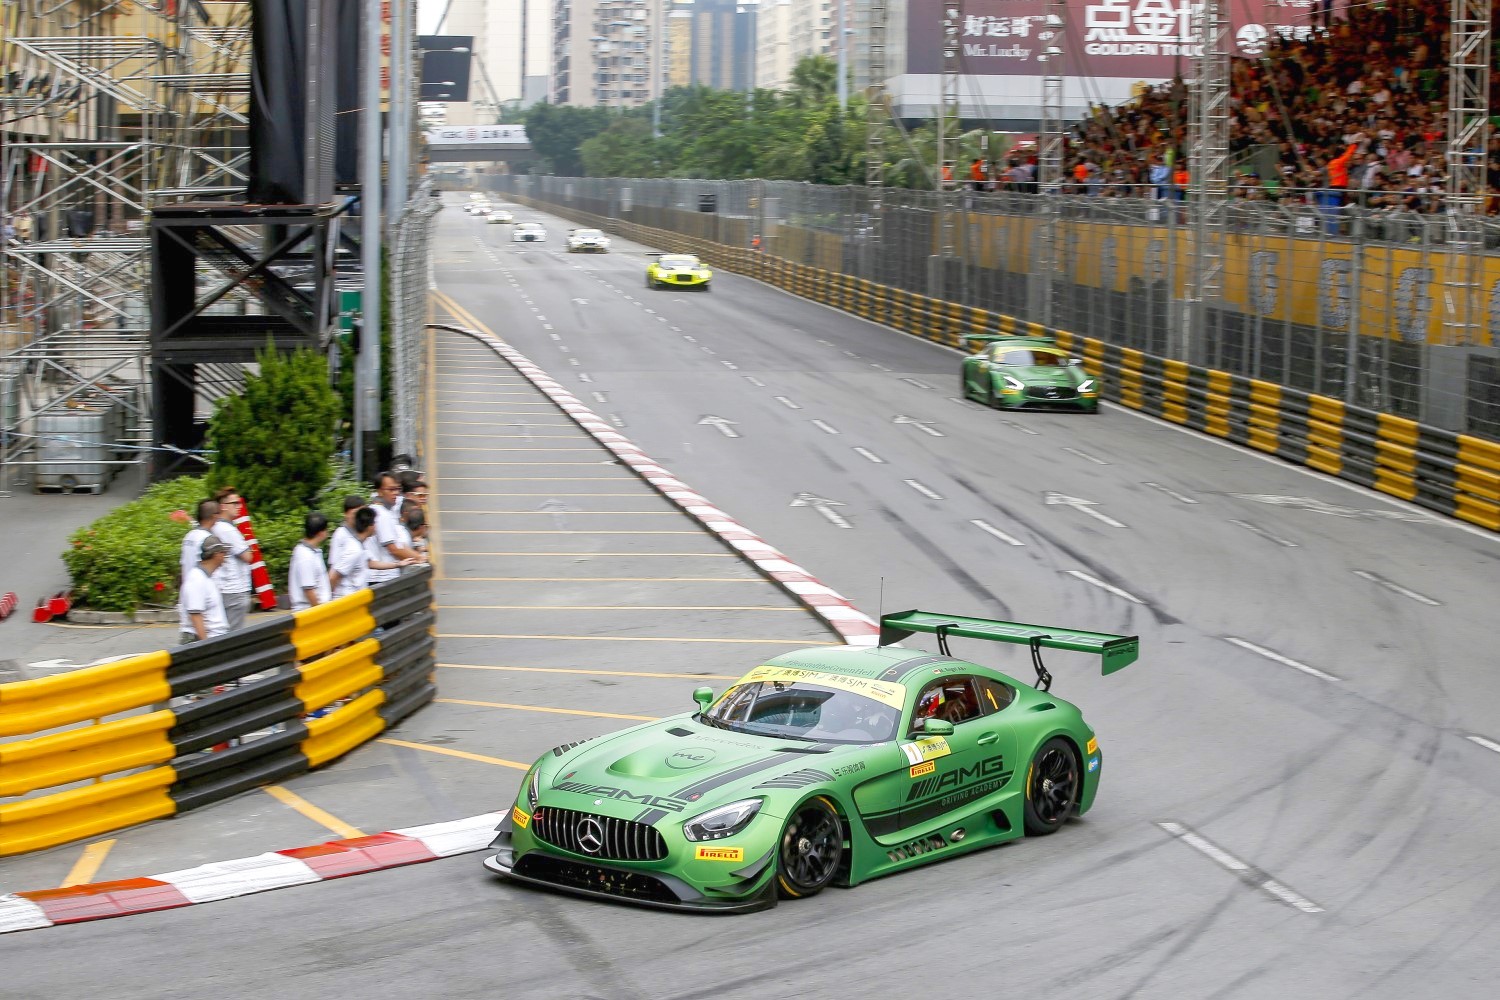 Engel in his green Mercedes at Macau